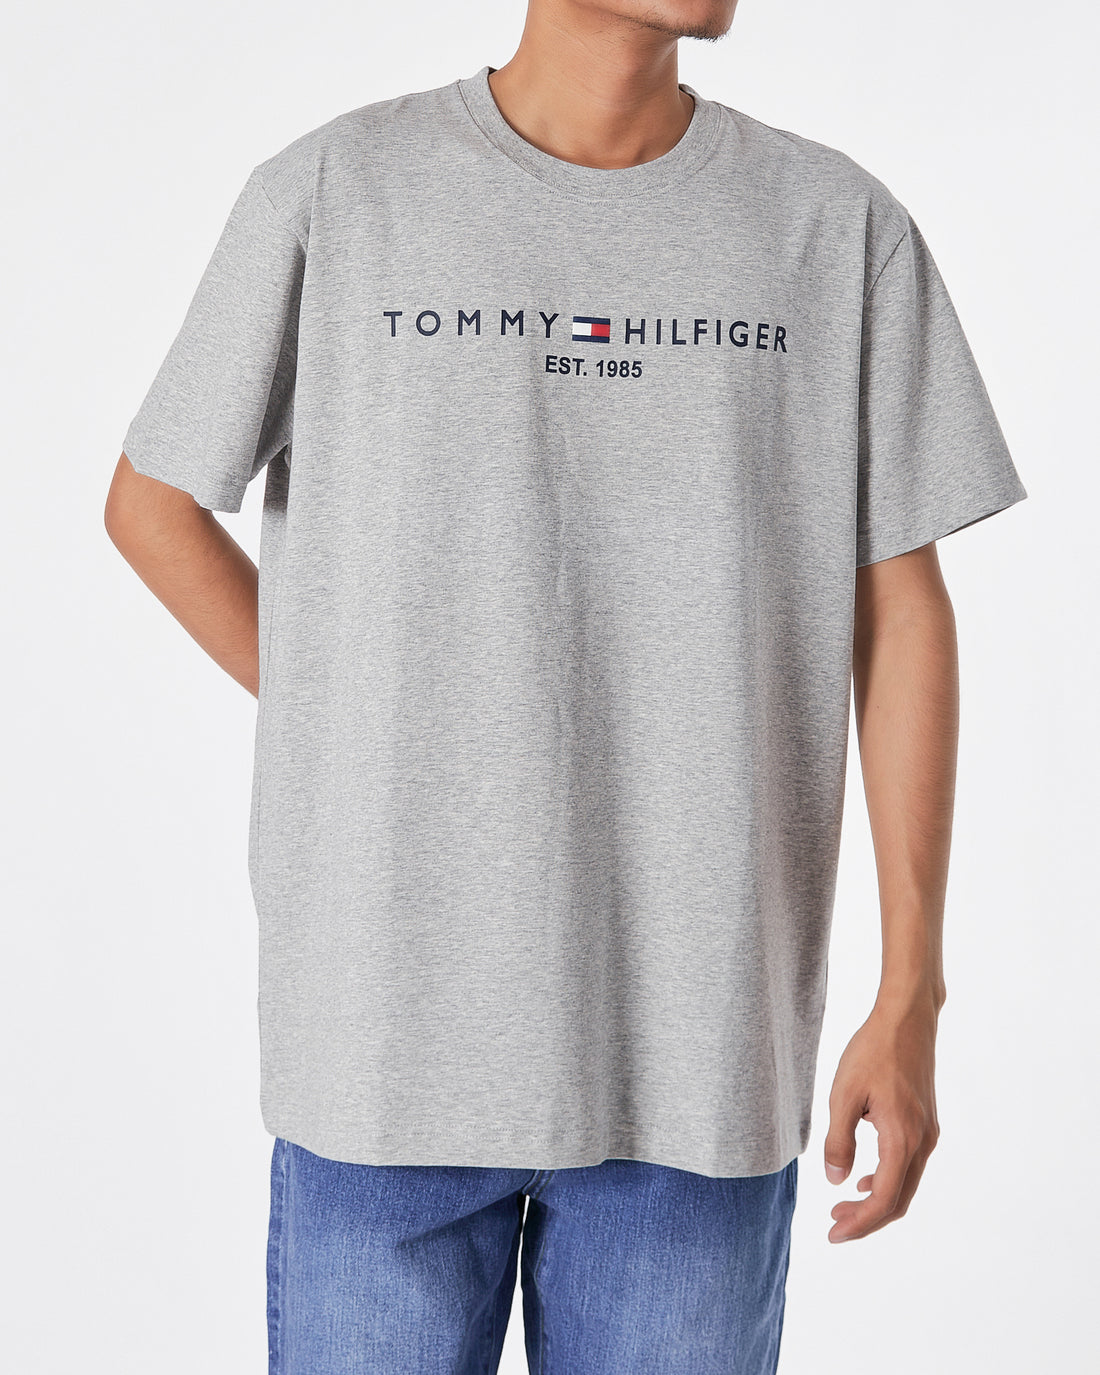 TH Logo Printed Men Grey T-Shirt 14.90